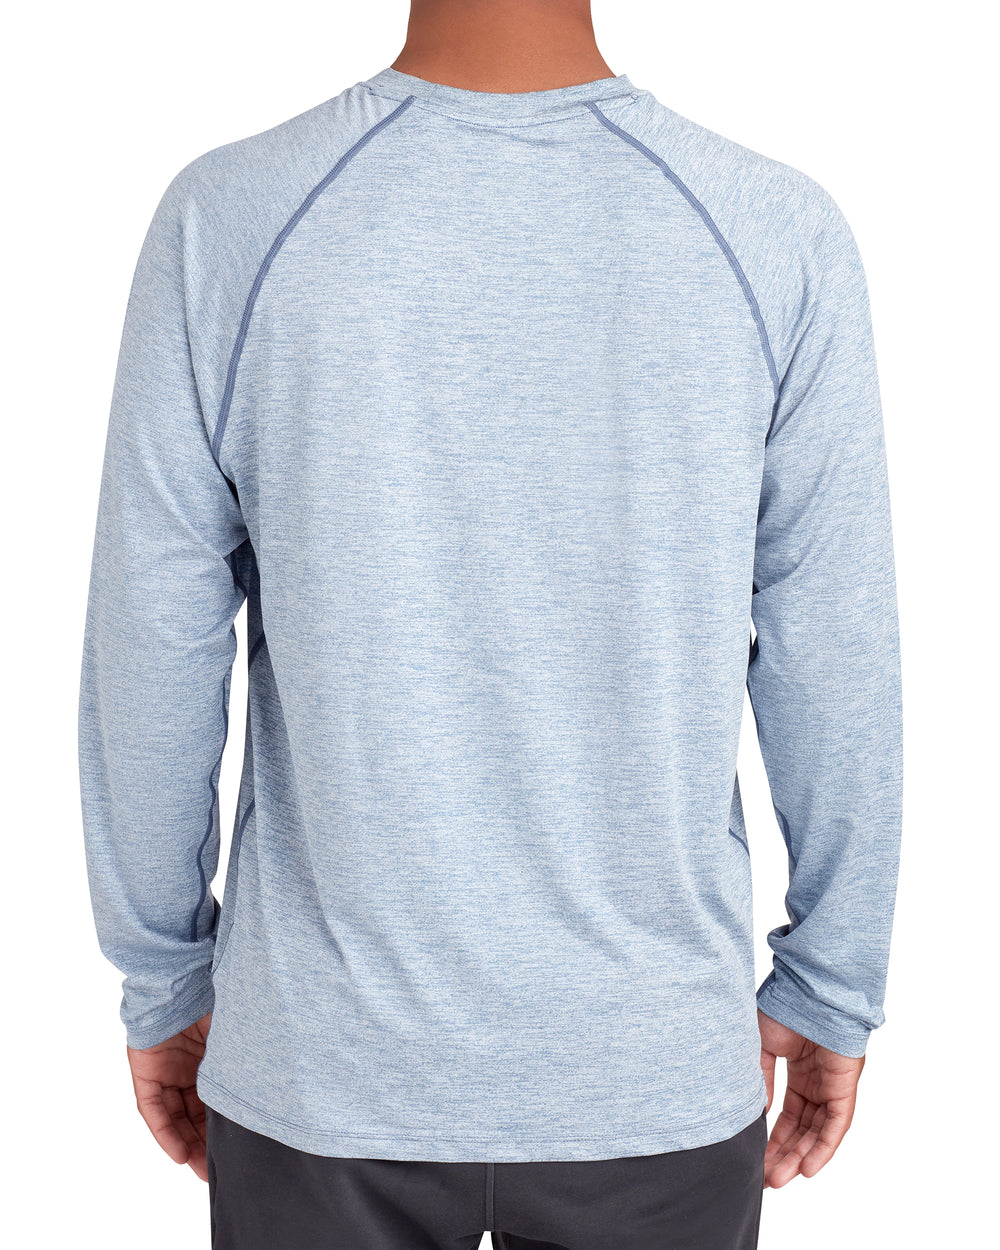 Long-Sleeved Raglan UPF 50+ T-Shirt - Blue